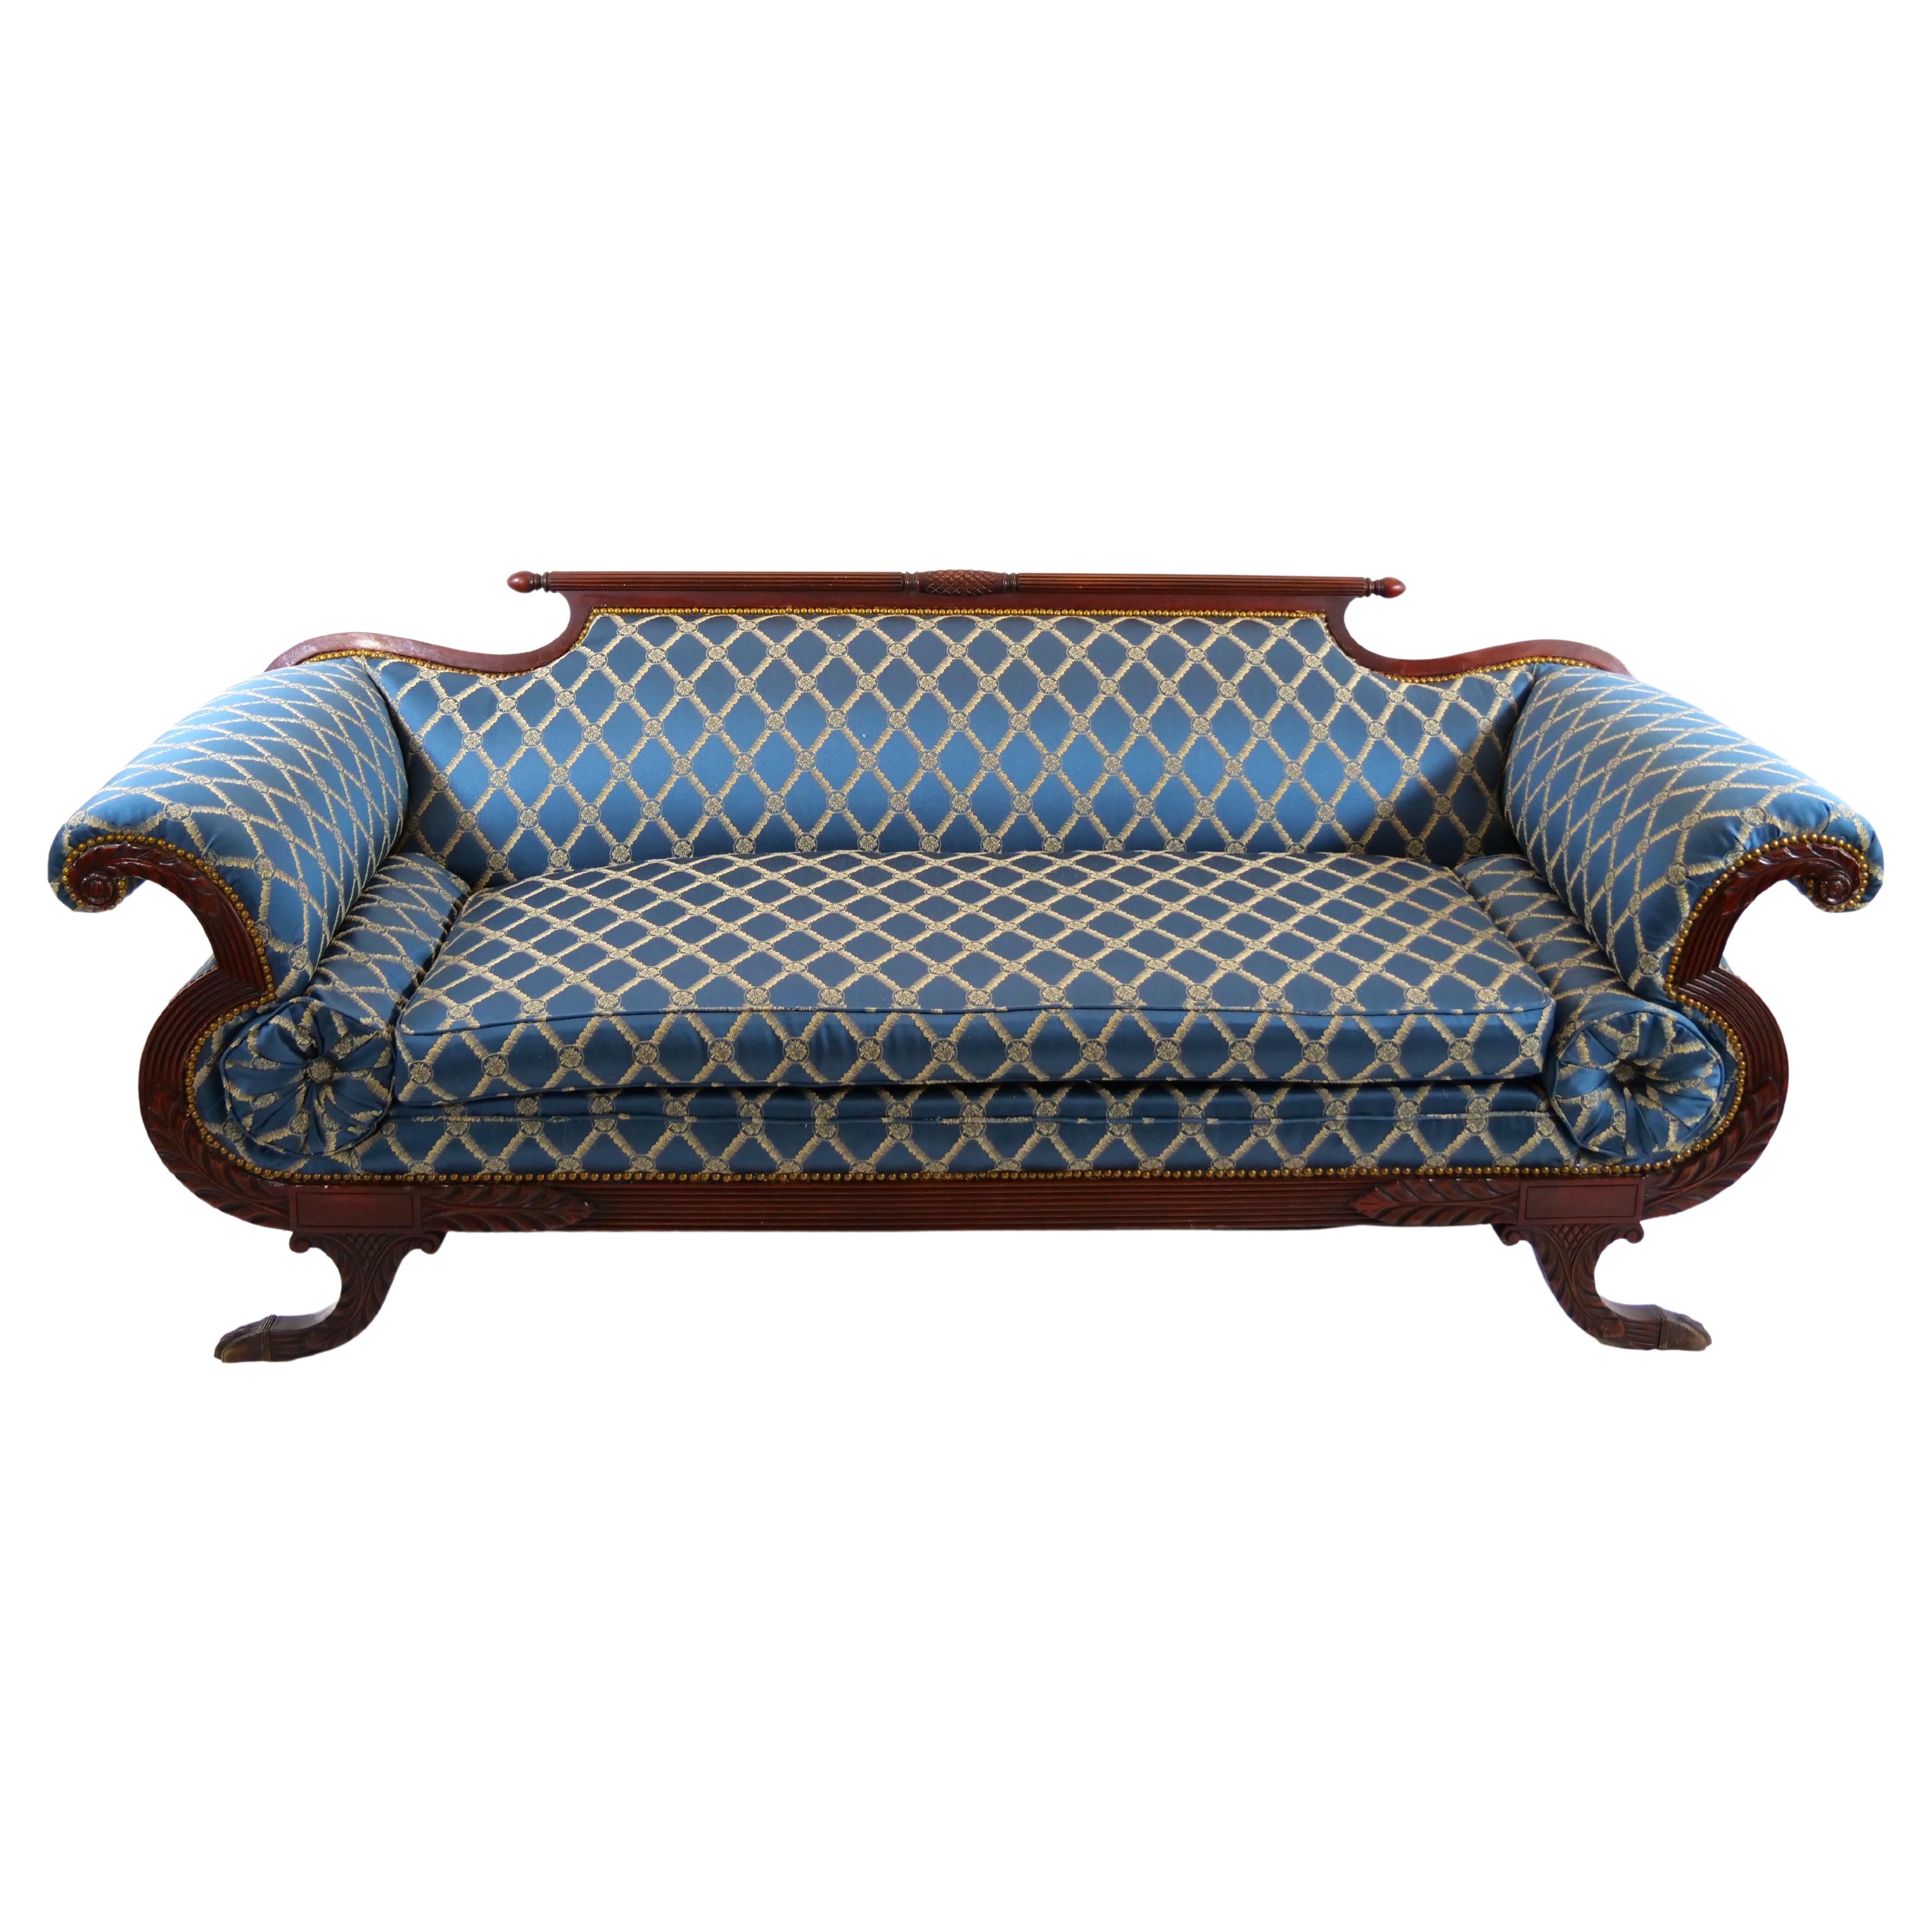 Mahagoni gerahmtes gepolstertes Sofa im Empire-Stil des 19. Jahrhunderts